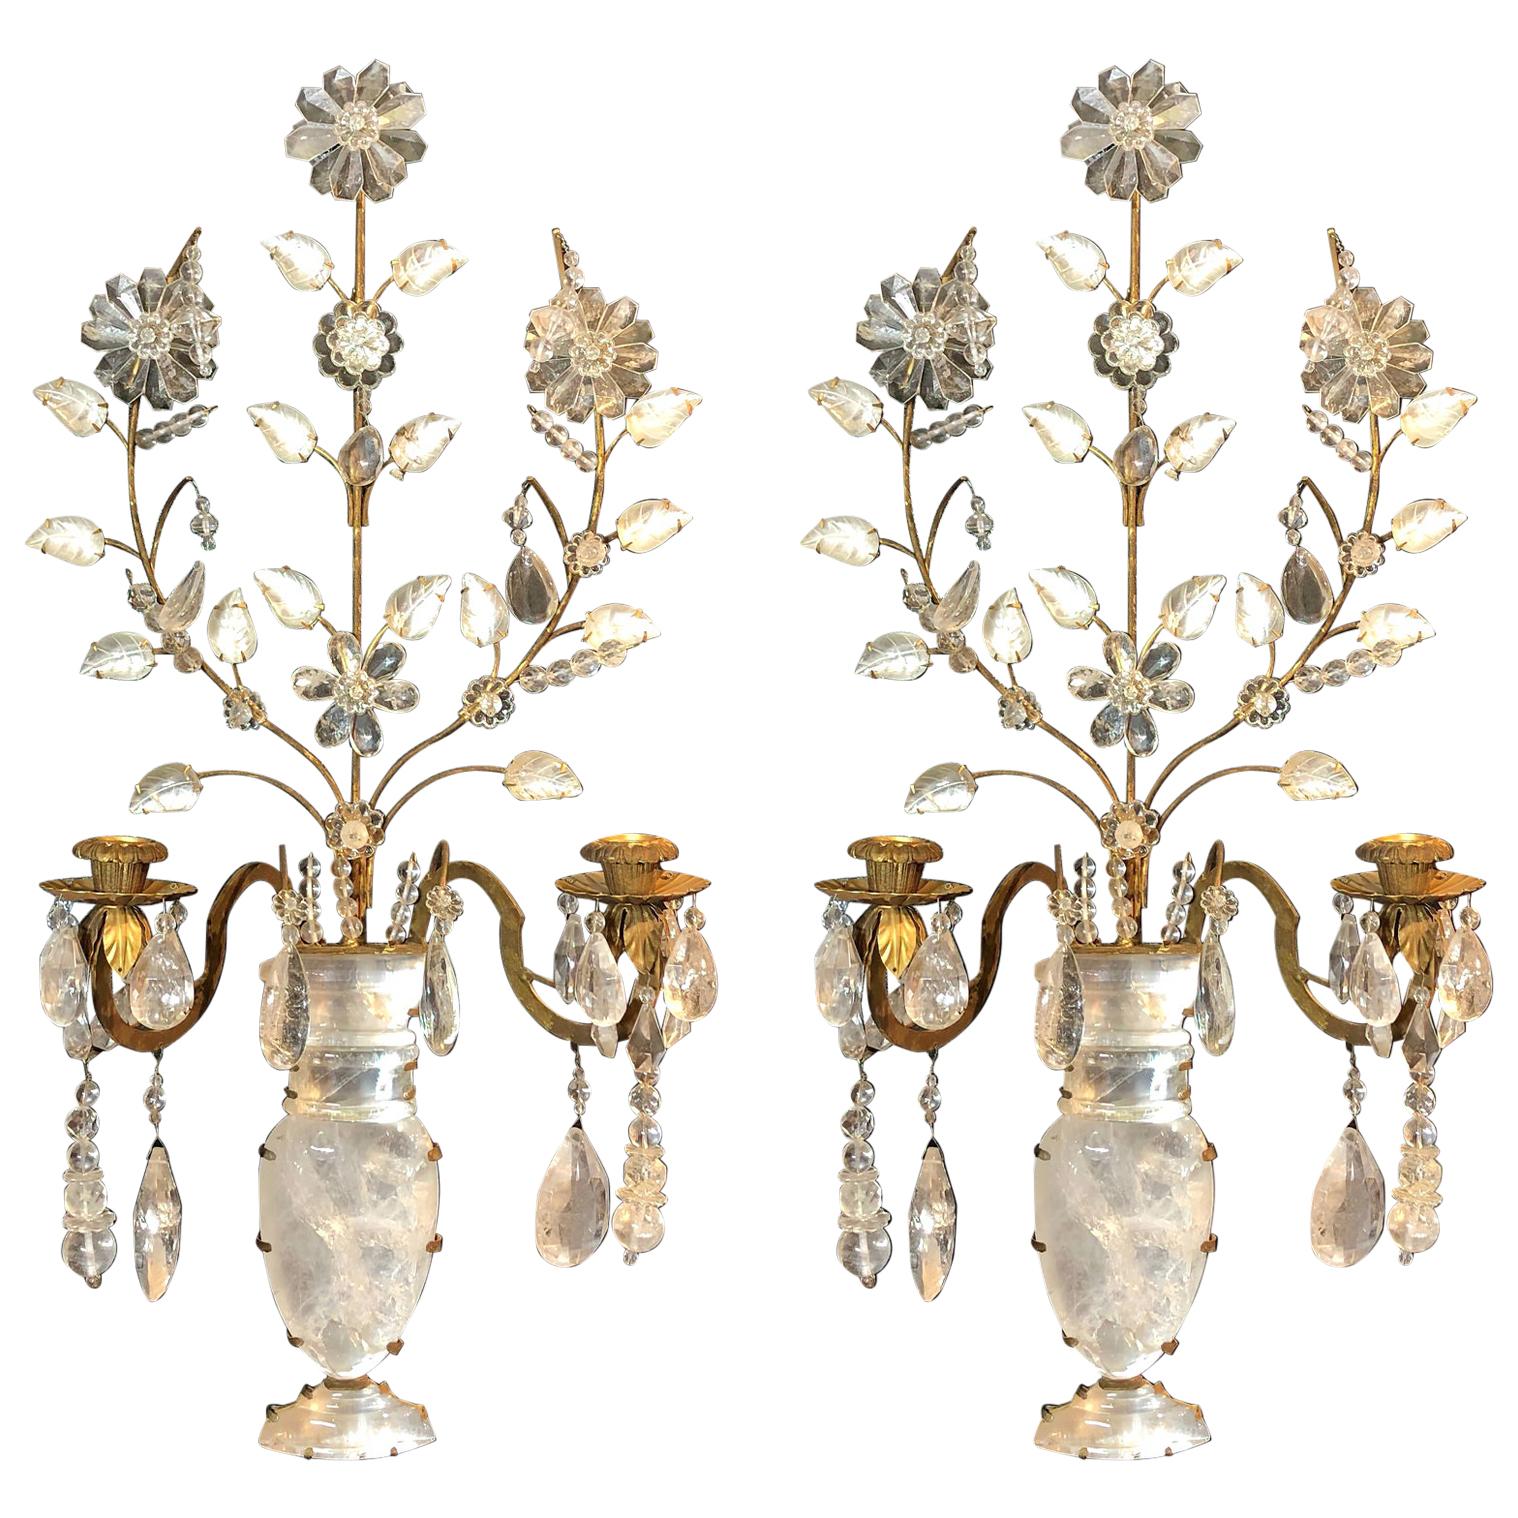 Pair of Rock Crystal Floral Urn Sconces